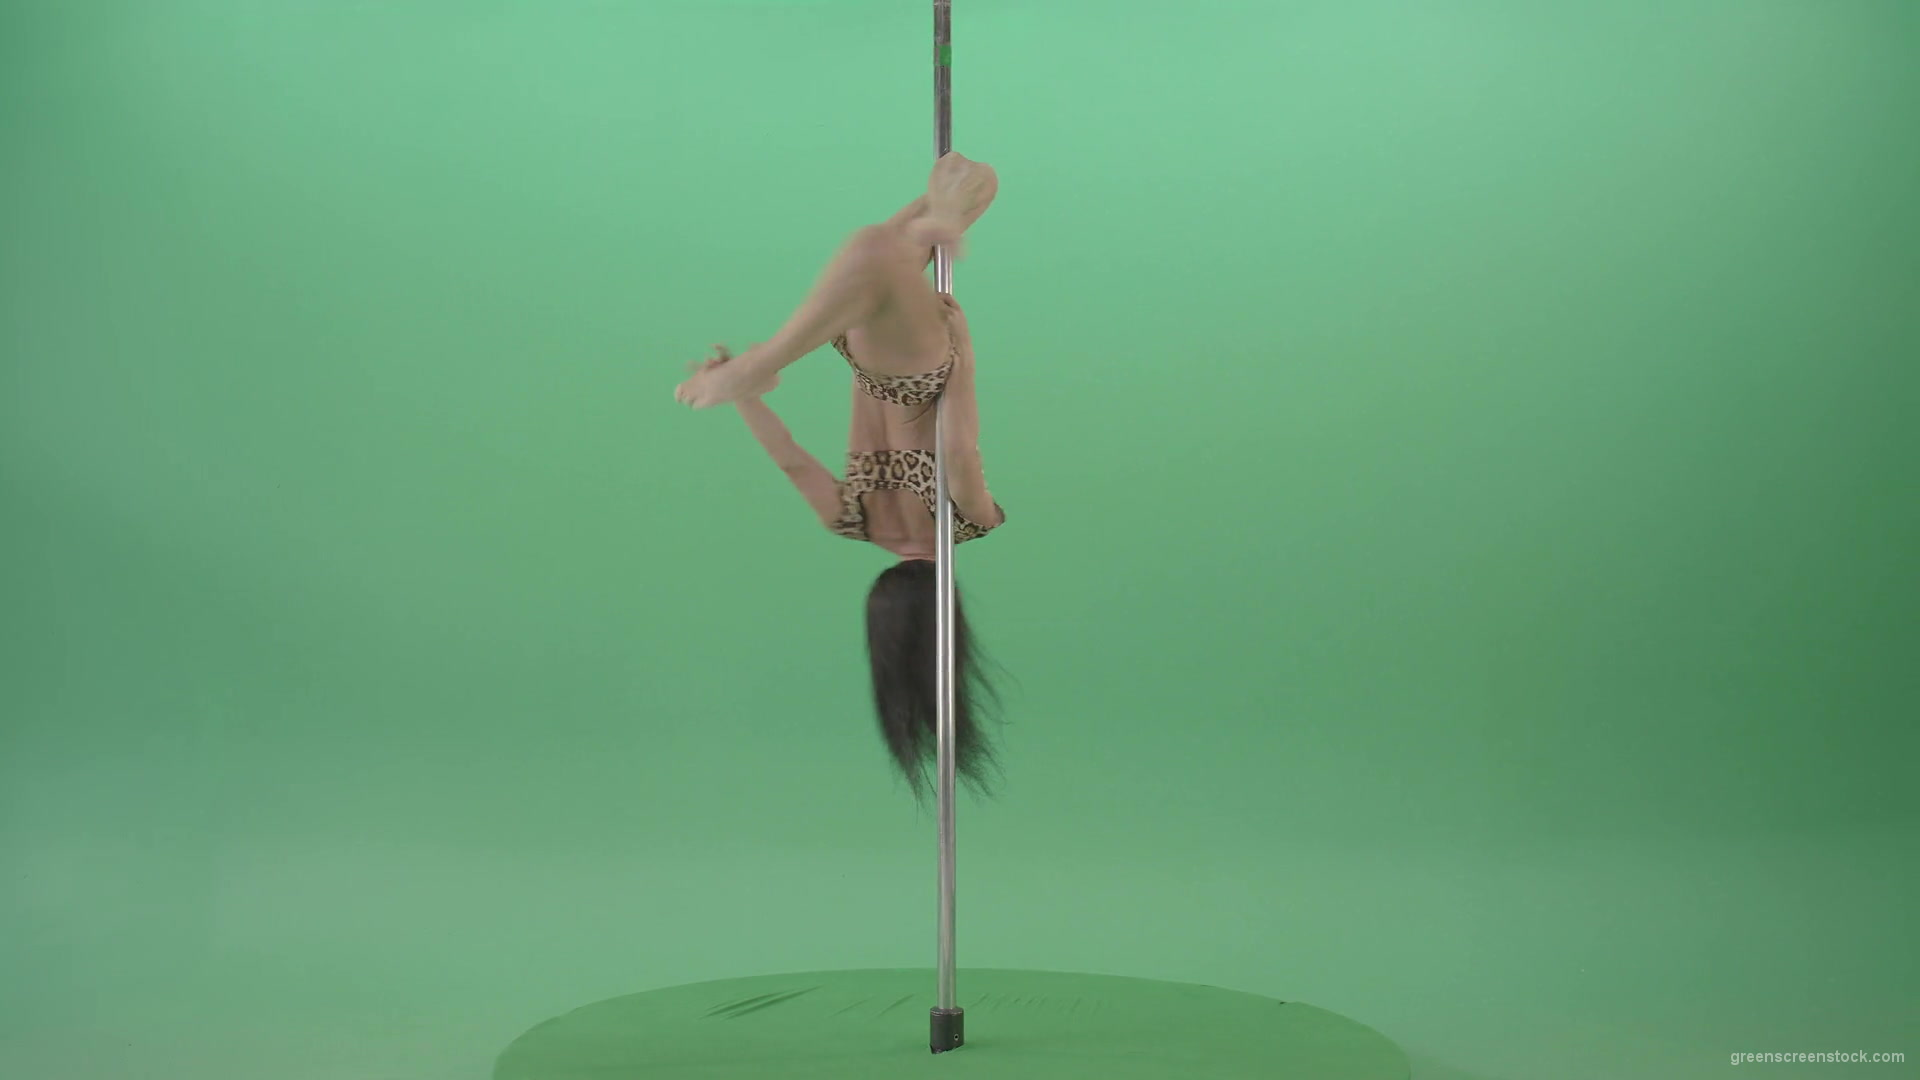 Athletic-sexy-female-model-spinning-on-pilon-in-jaguar-skin-underwear-dancing-pole-dance-on-Green-Screen-4K-Video-Footage-1920_006 Green Screen Stock